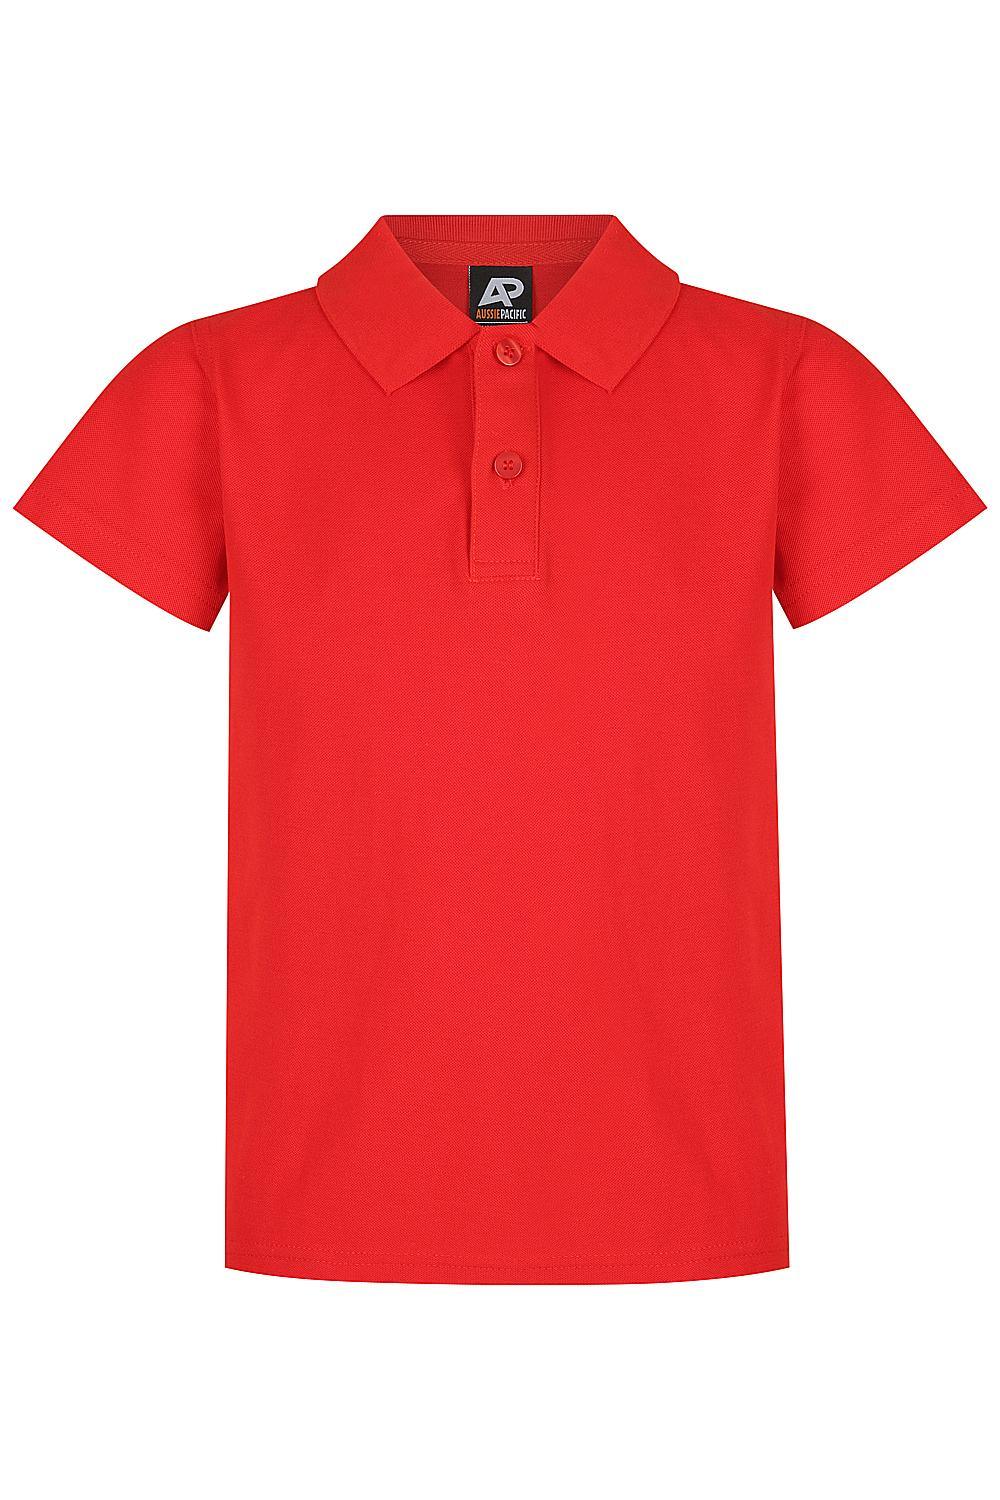 Custom Kids Hunter Shirts - Red